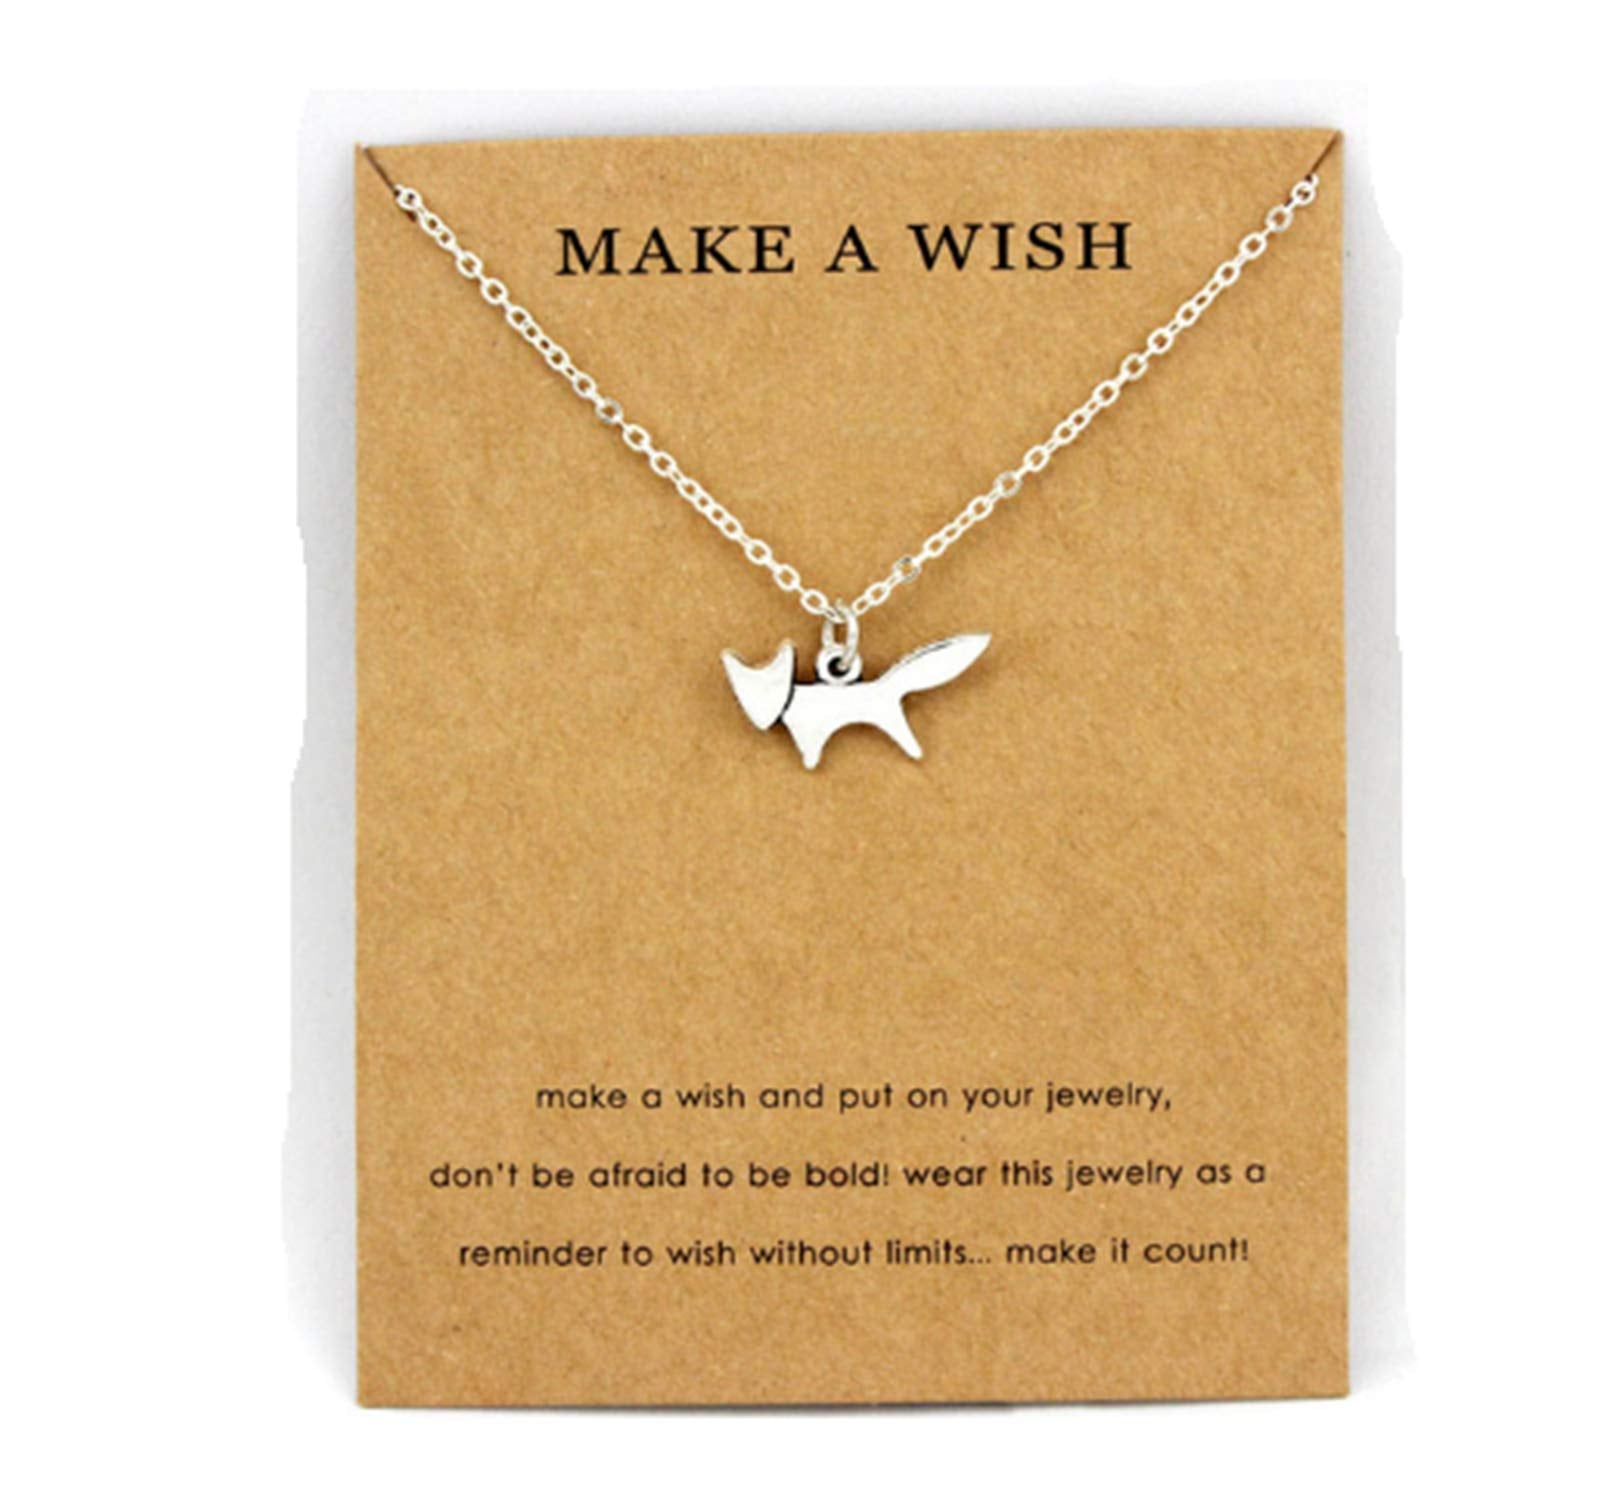 Fox necklace pendant charm, jewellery gift for friend, sister, teacher, animal lover present